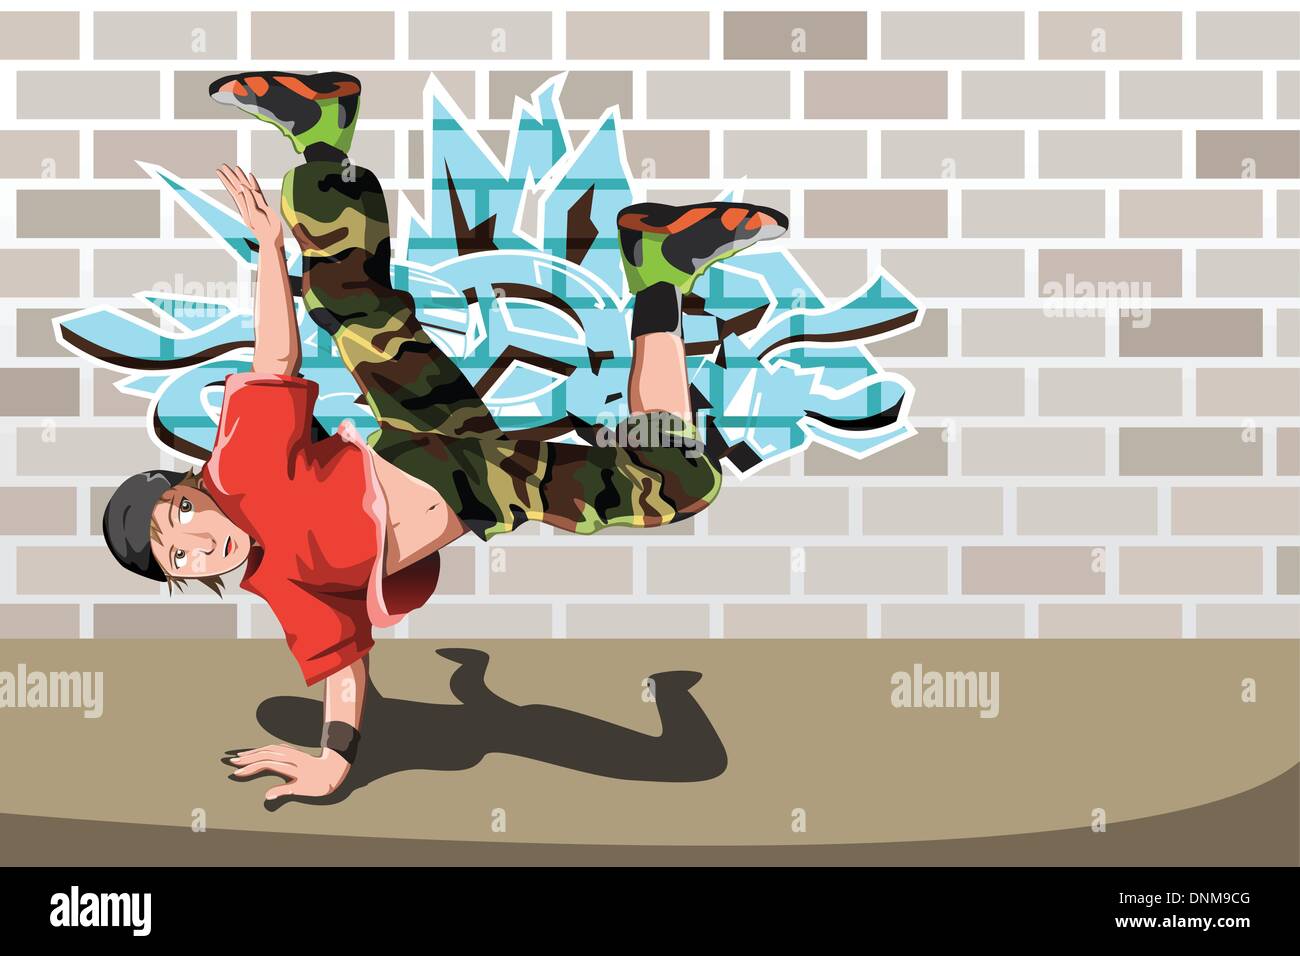 A vector illustration of a hip-hop or street dancer Stock Vector